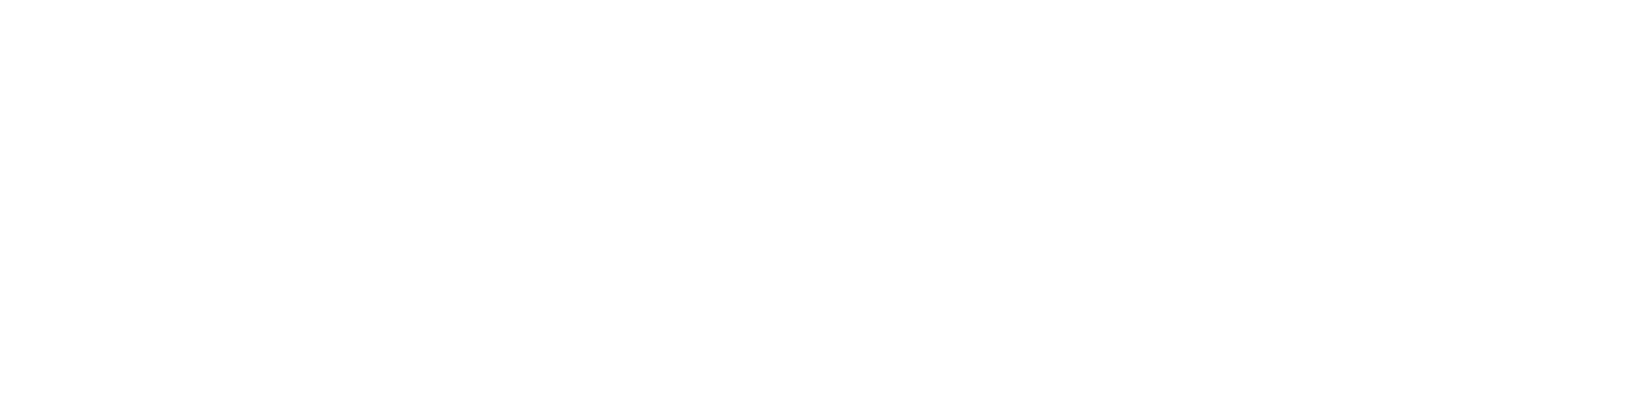 Treatwell-x-HOR_Logo_White_RGB-01